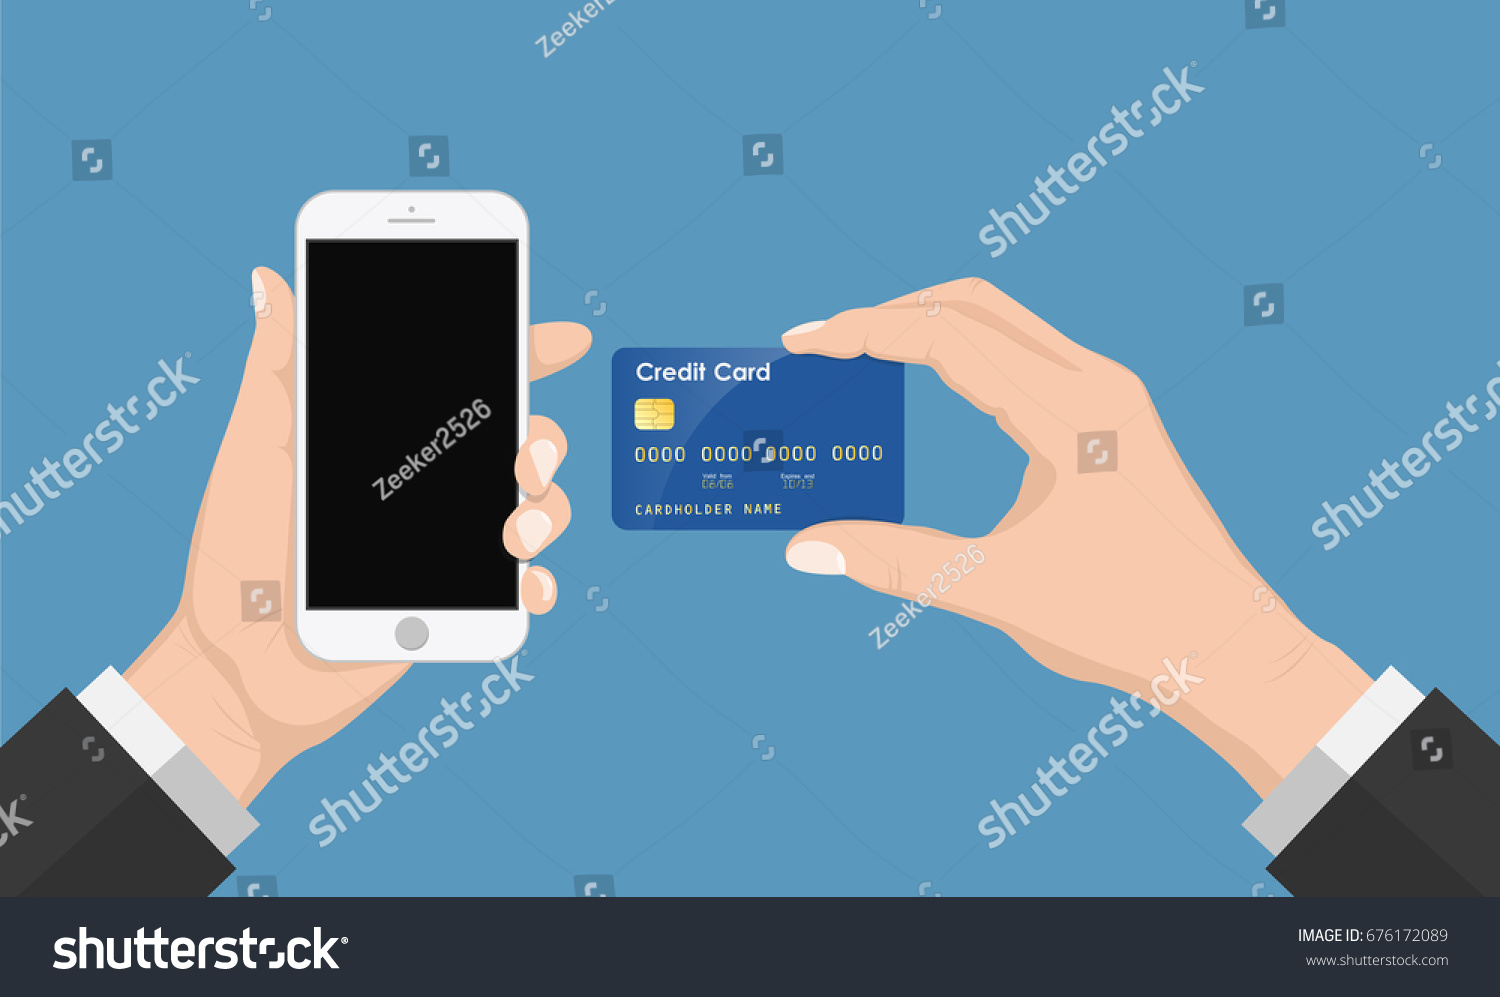 Human Hand Holding Phone Credit Card Stock Vector (Royalty Free) 676172089